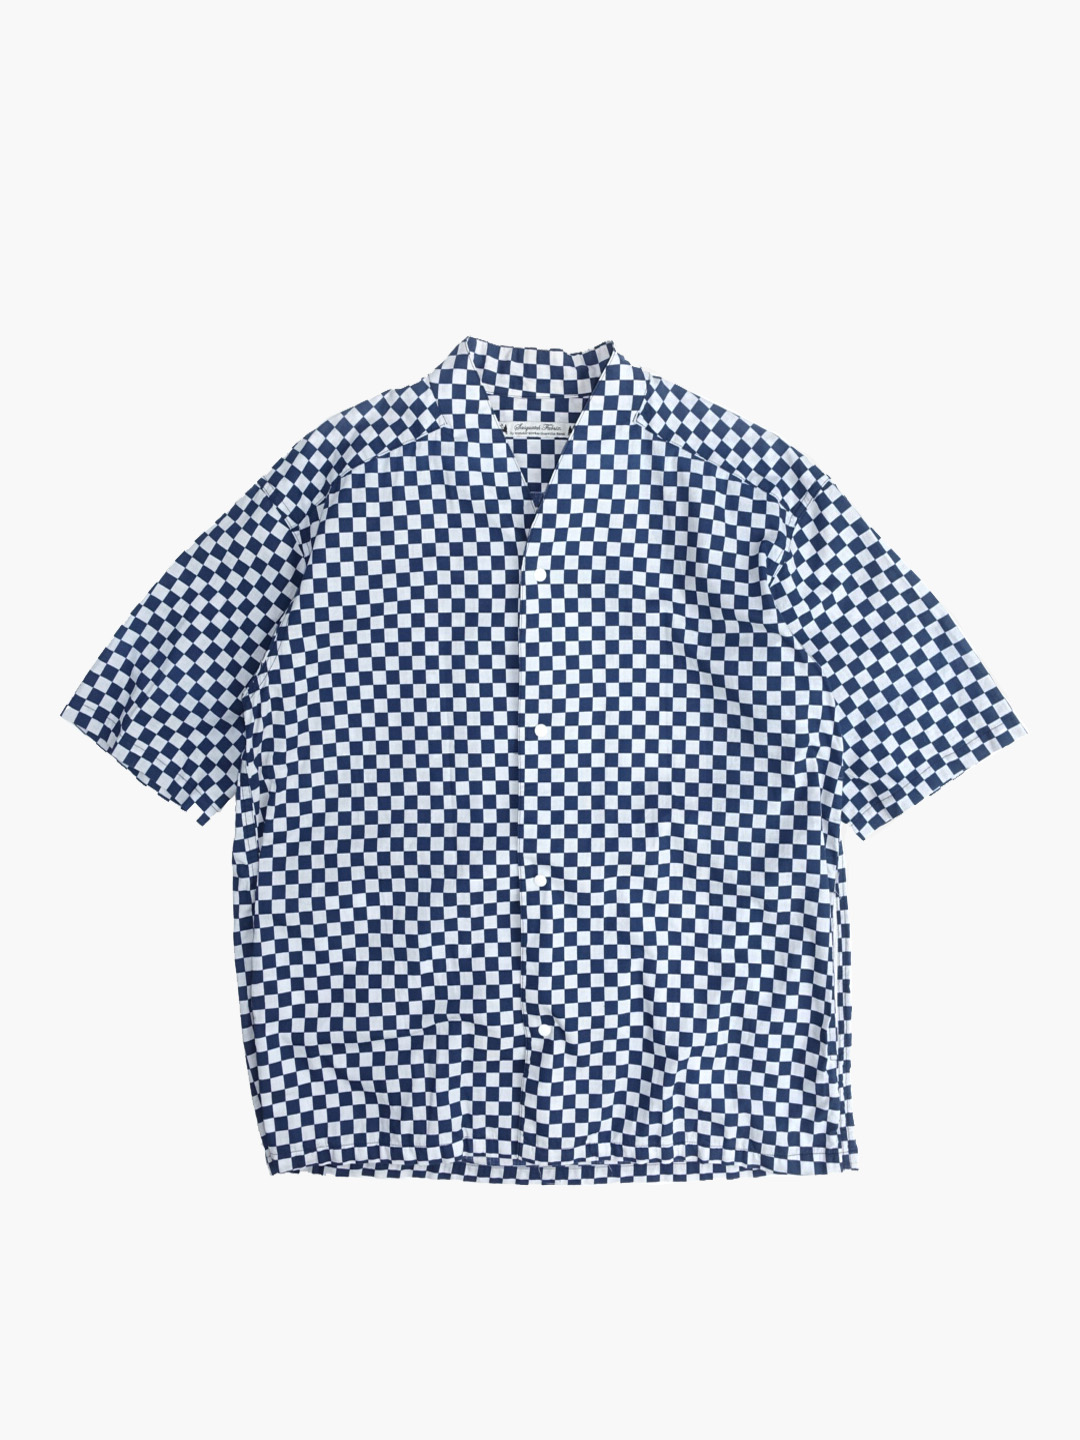 SASQUATCHFABRIX.Checkerboard shirt